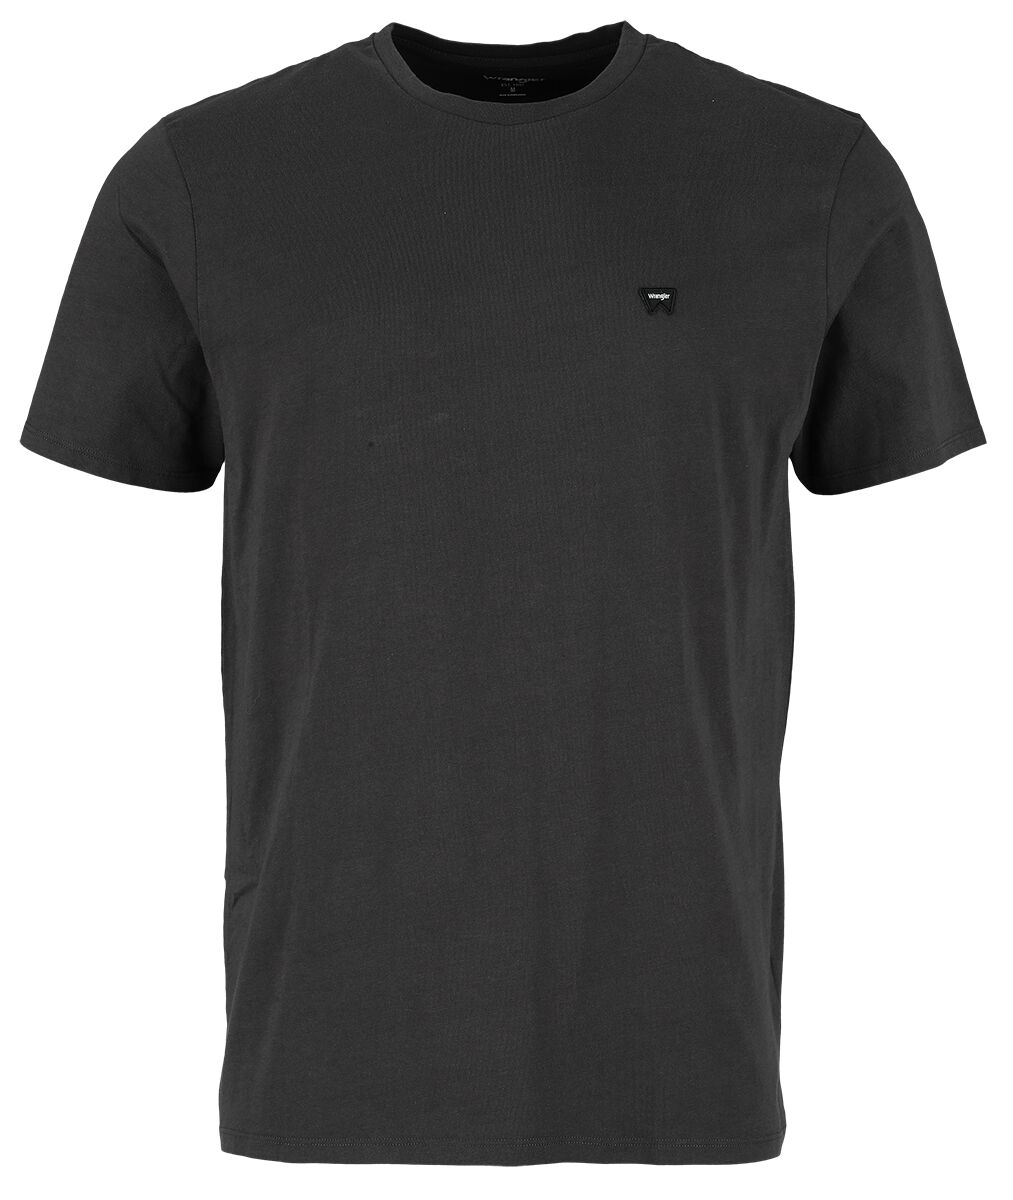 Wrangler Sign Off Tee Faded Black T-Shirt schwarz in XL